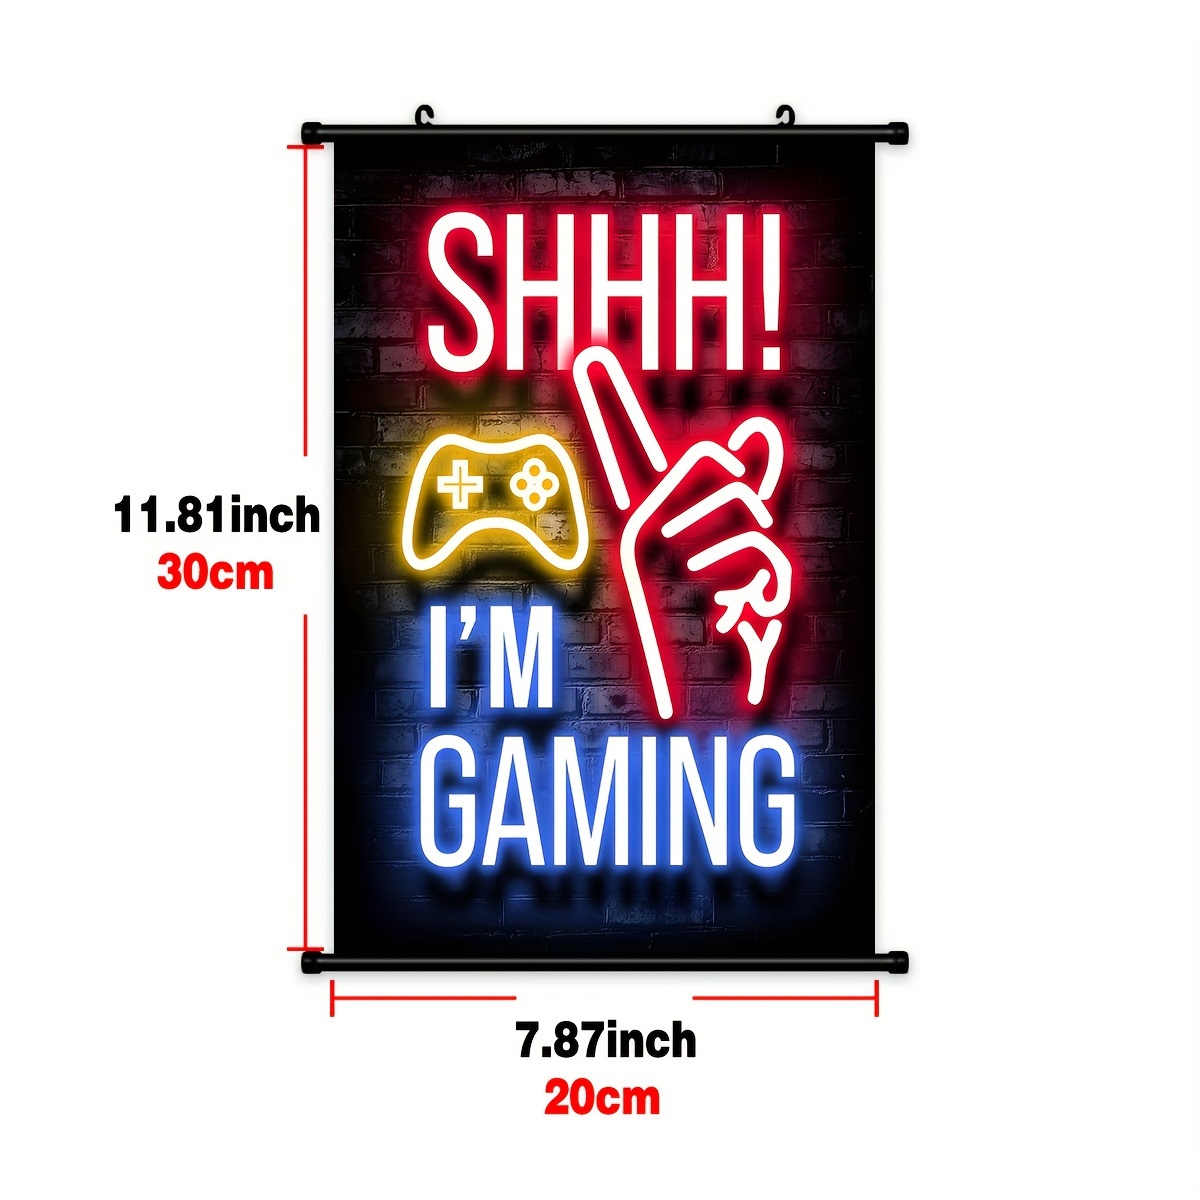 Art Poster Shhh! I'm Gaming, poster gaming 